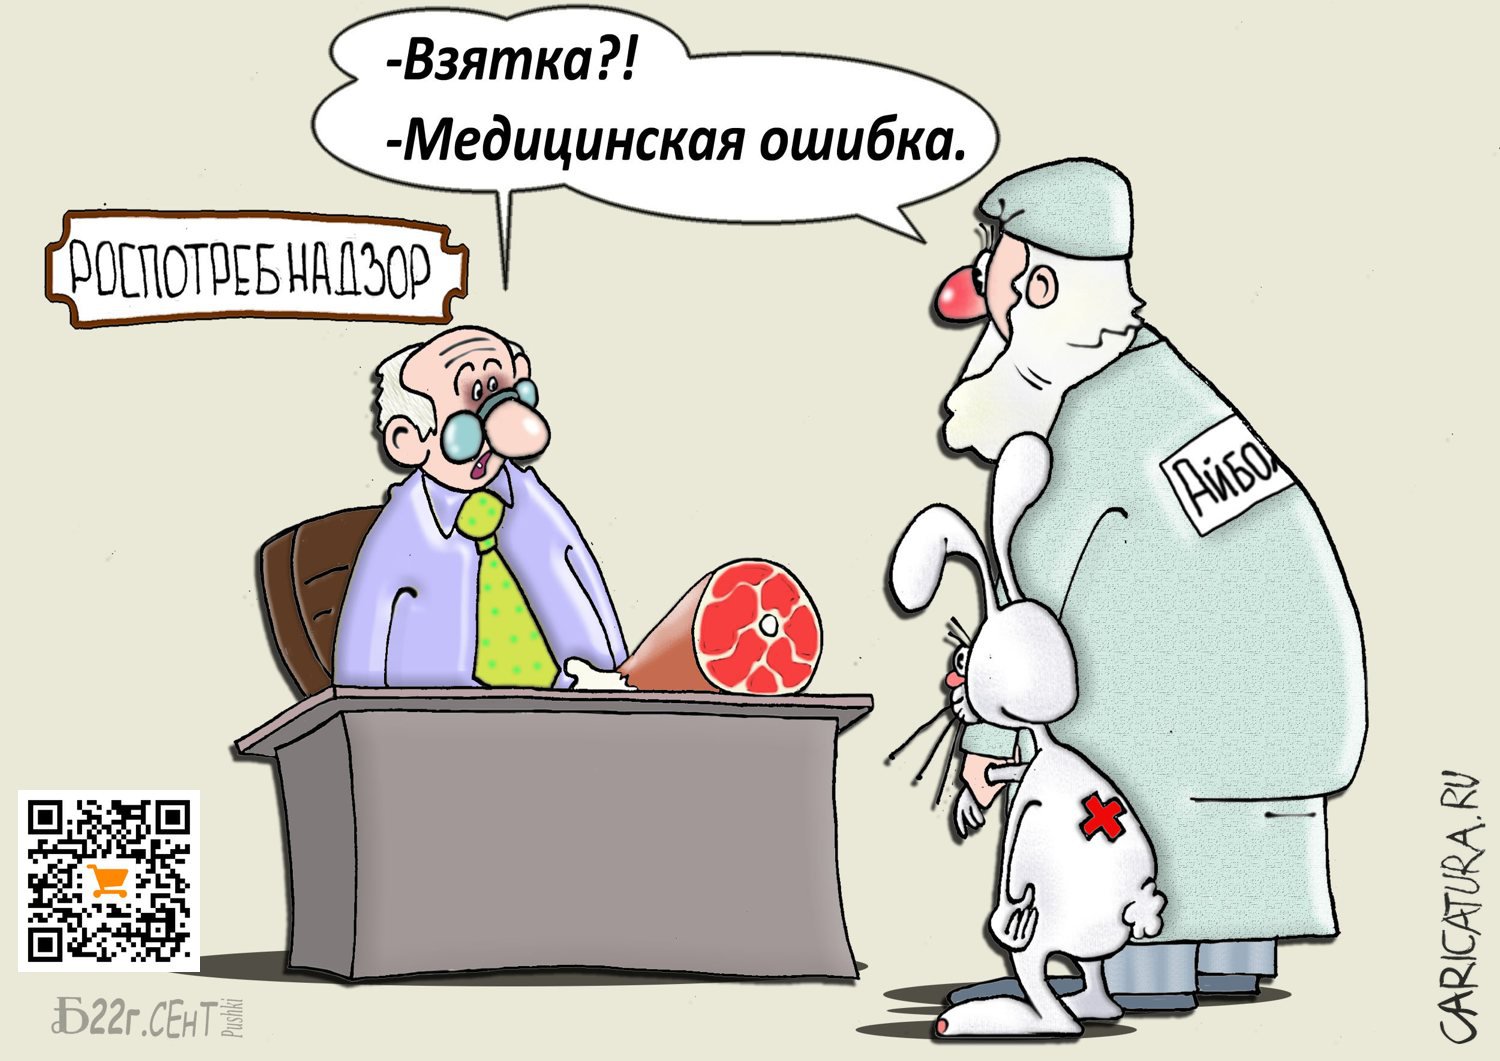 Карикатура "Про врачебную ошибку", Борис Демин